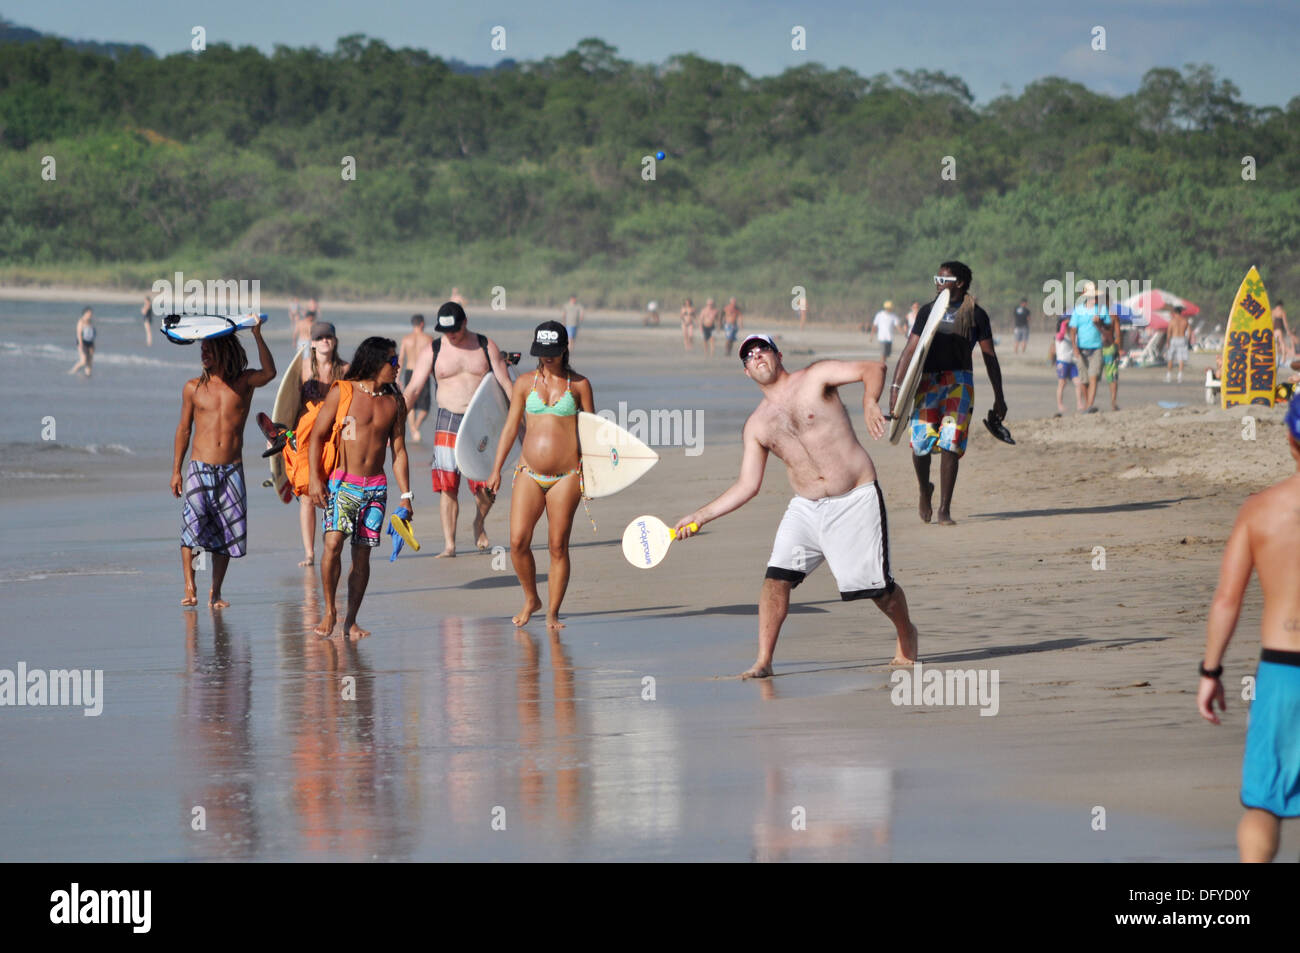 Costa Rica Beach Tennis Tourist Banque D Image Et Photos Alamy